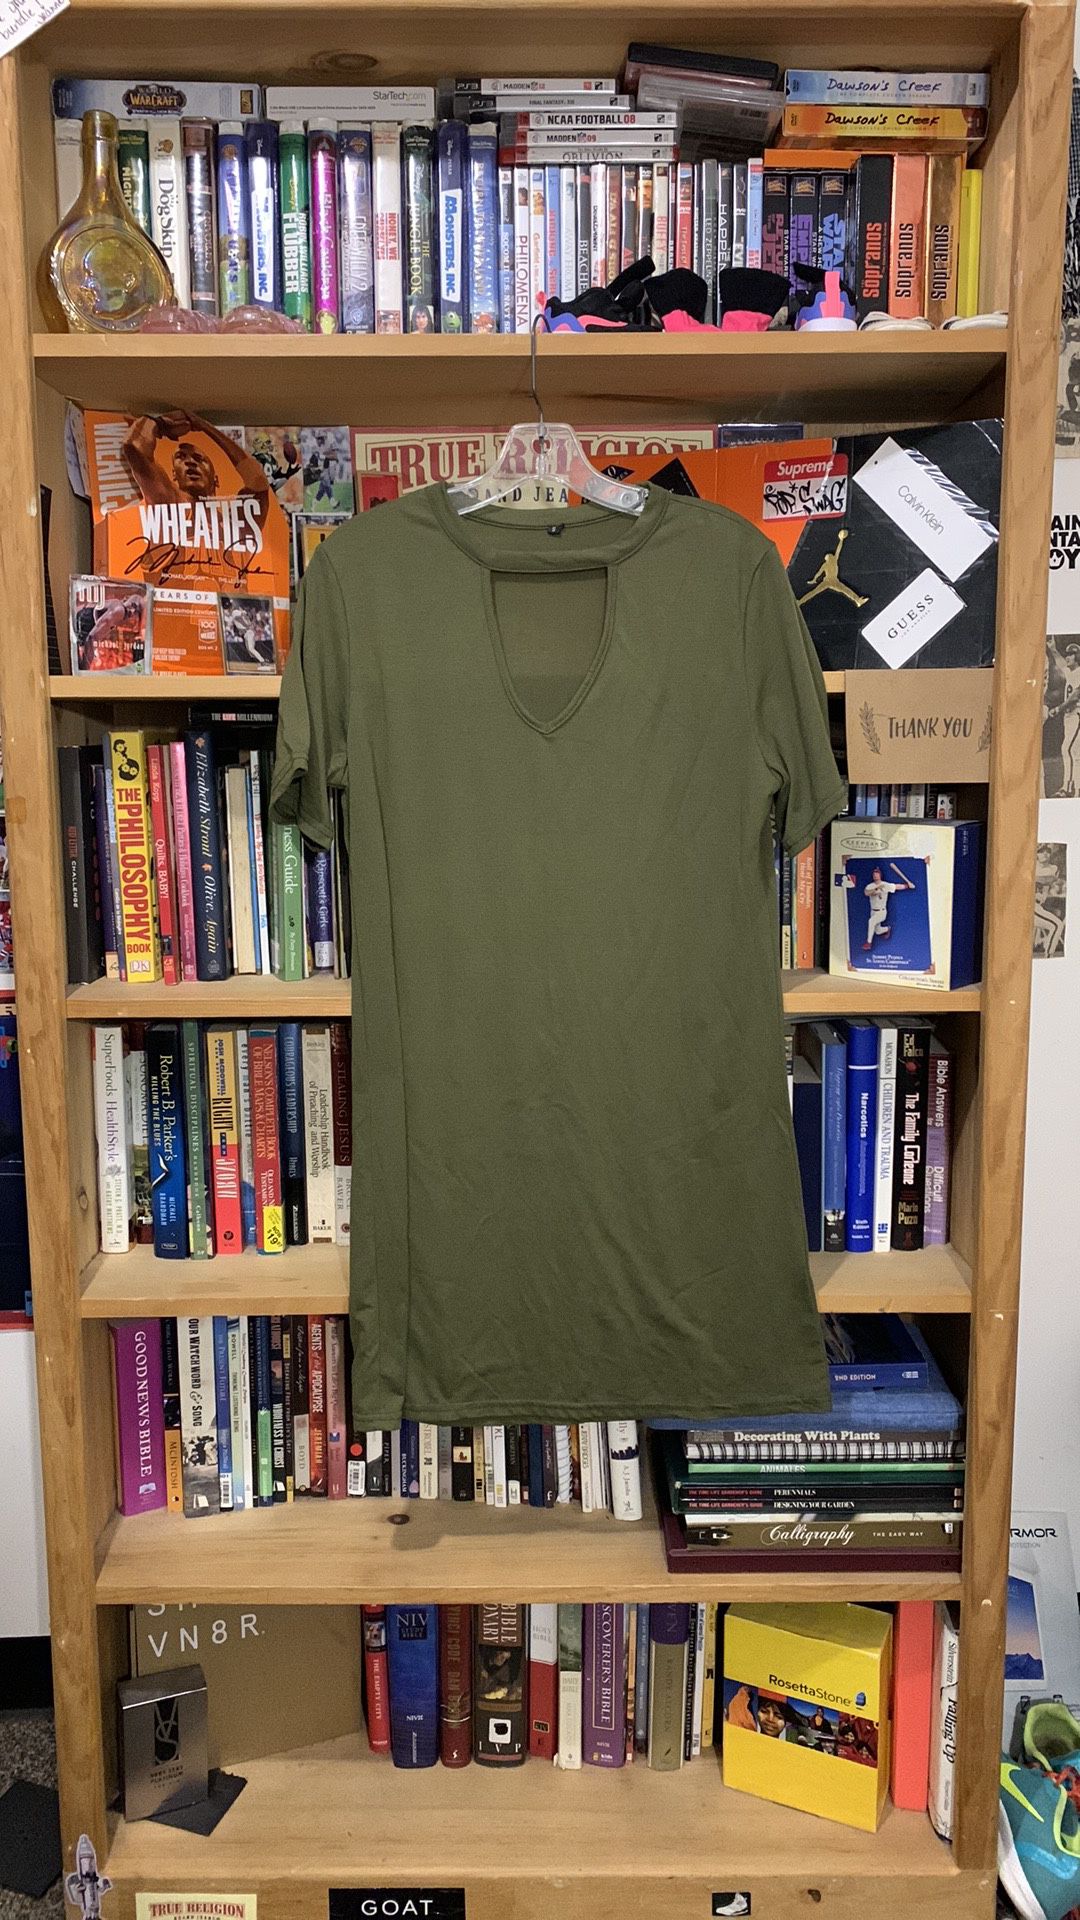 SHEIN-women’s army green short sleeve mid-length slip-on shirt dress